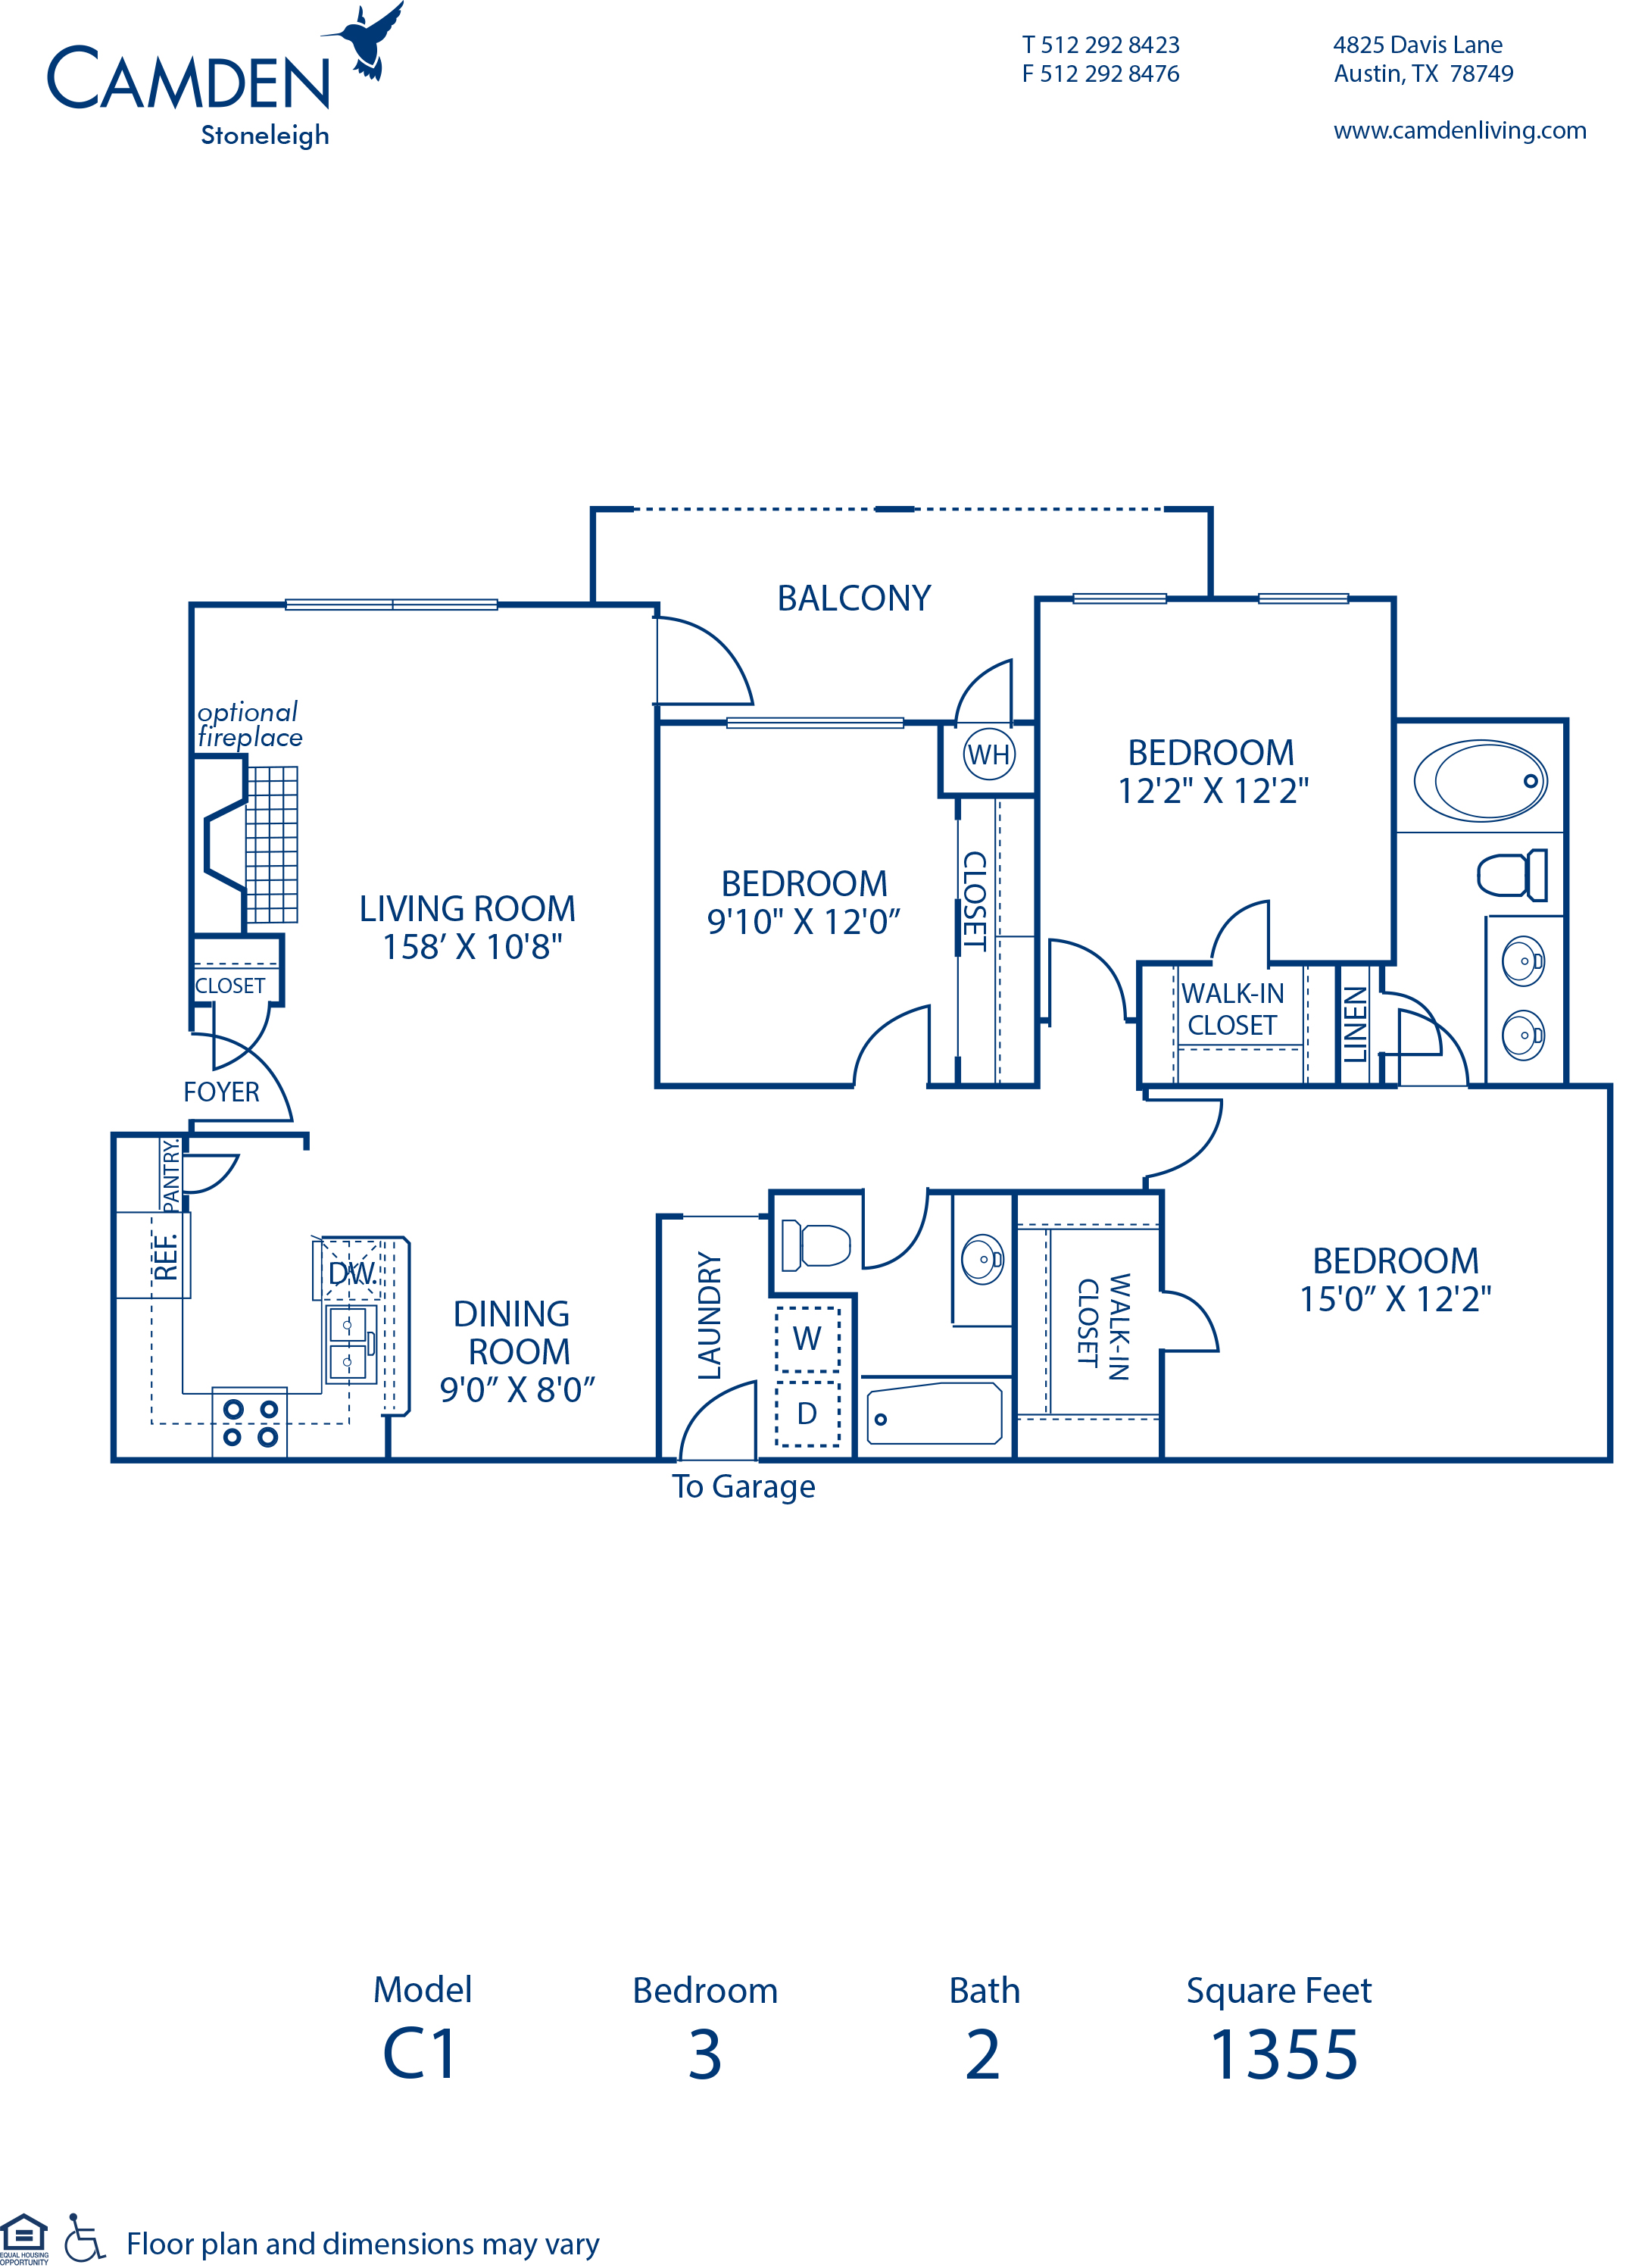 1, 2 & 3 Bedroom Apartments in Austin, TX - Camden Stoneleigh